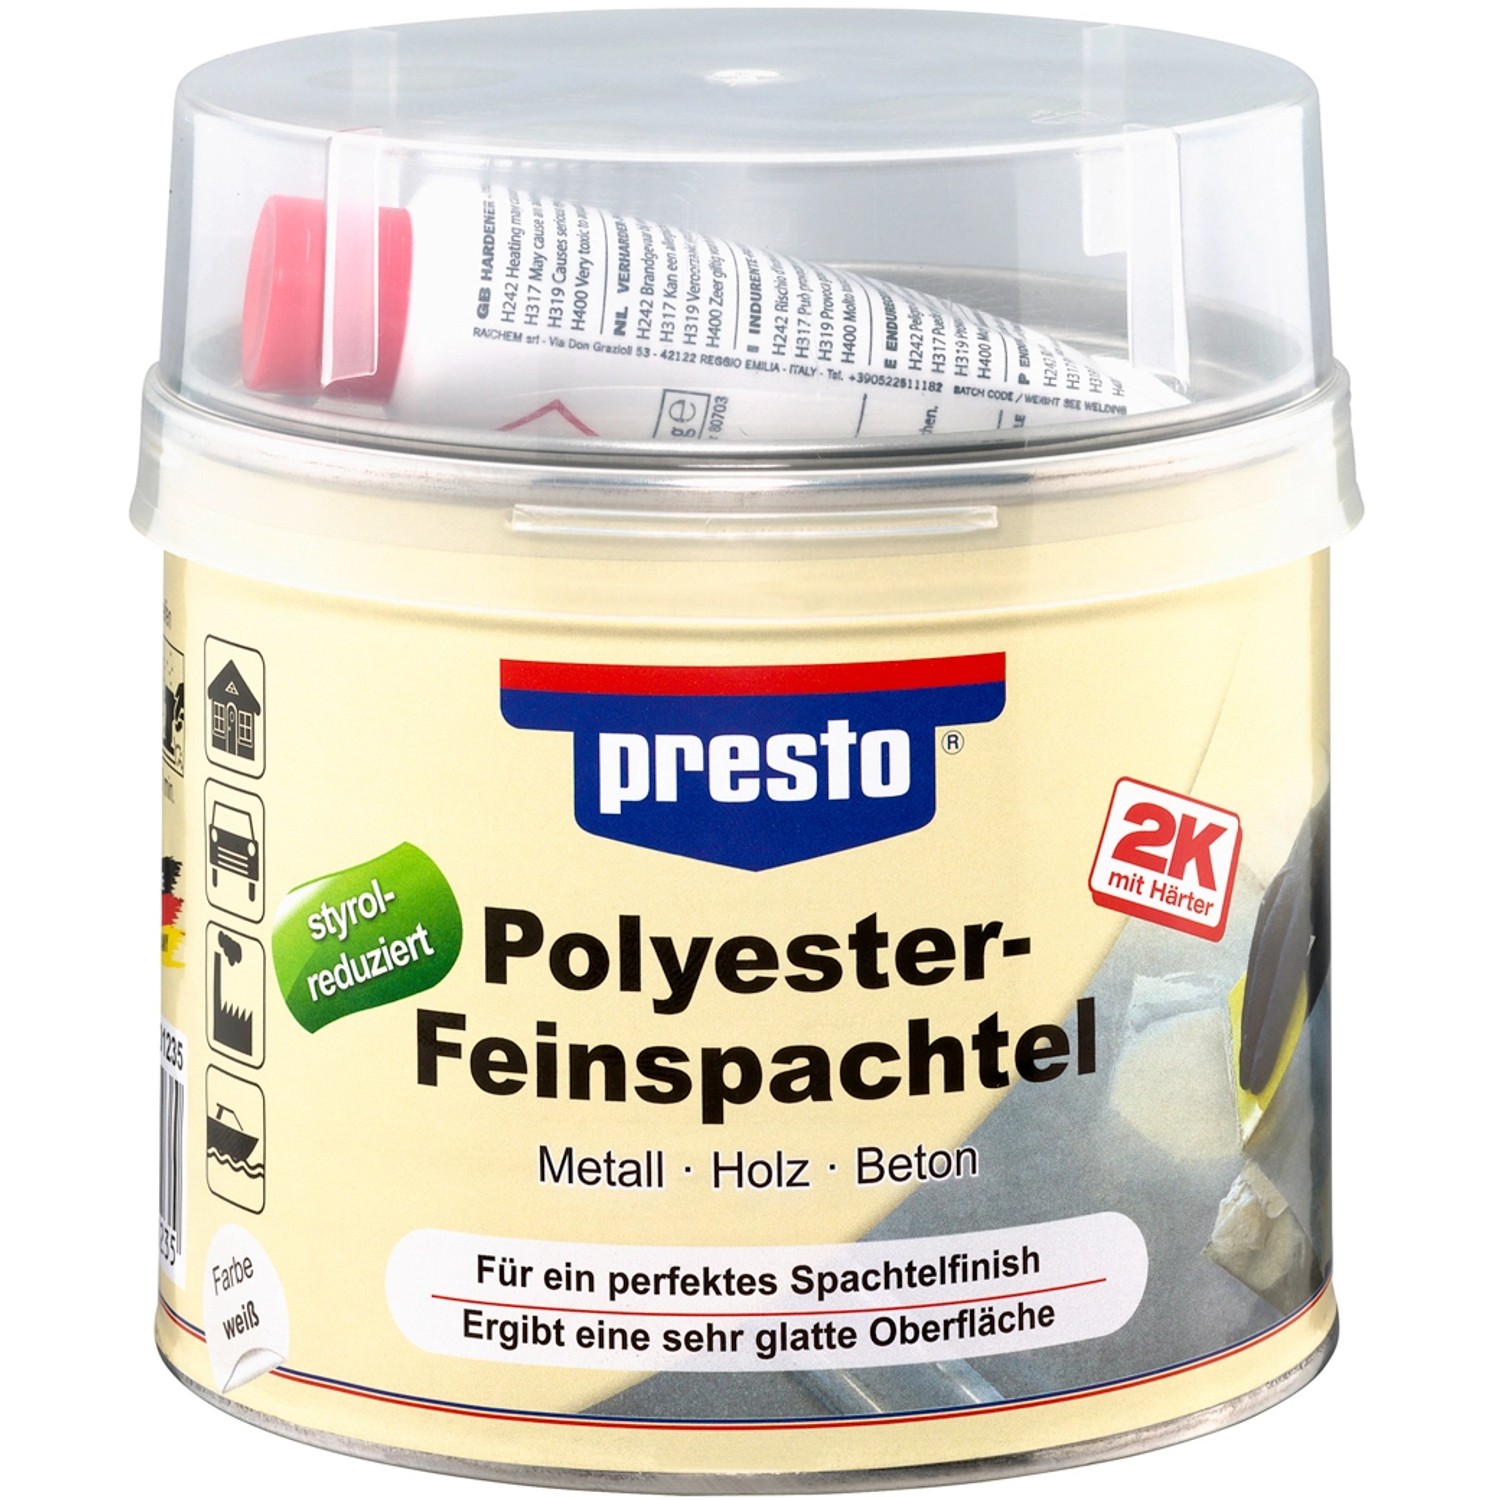 Presto Polyester-Feinspachtel 1 Kg